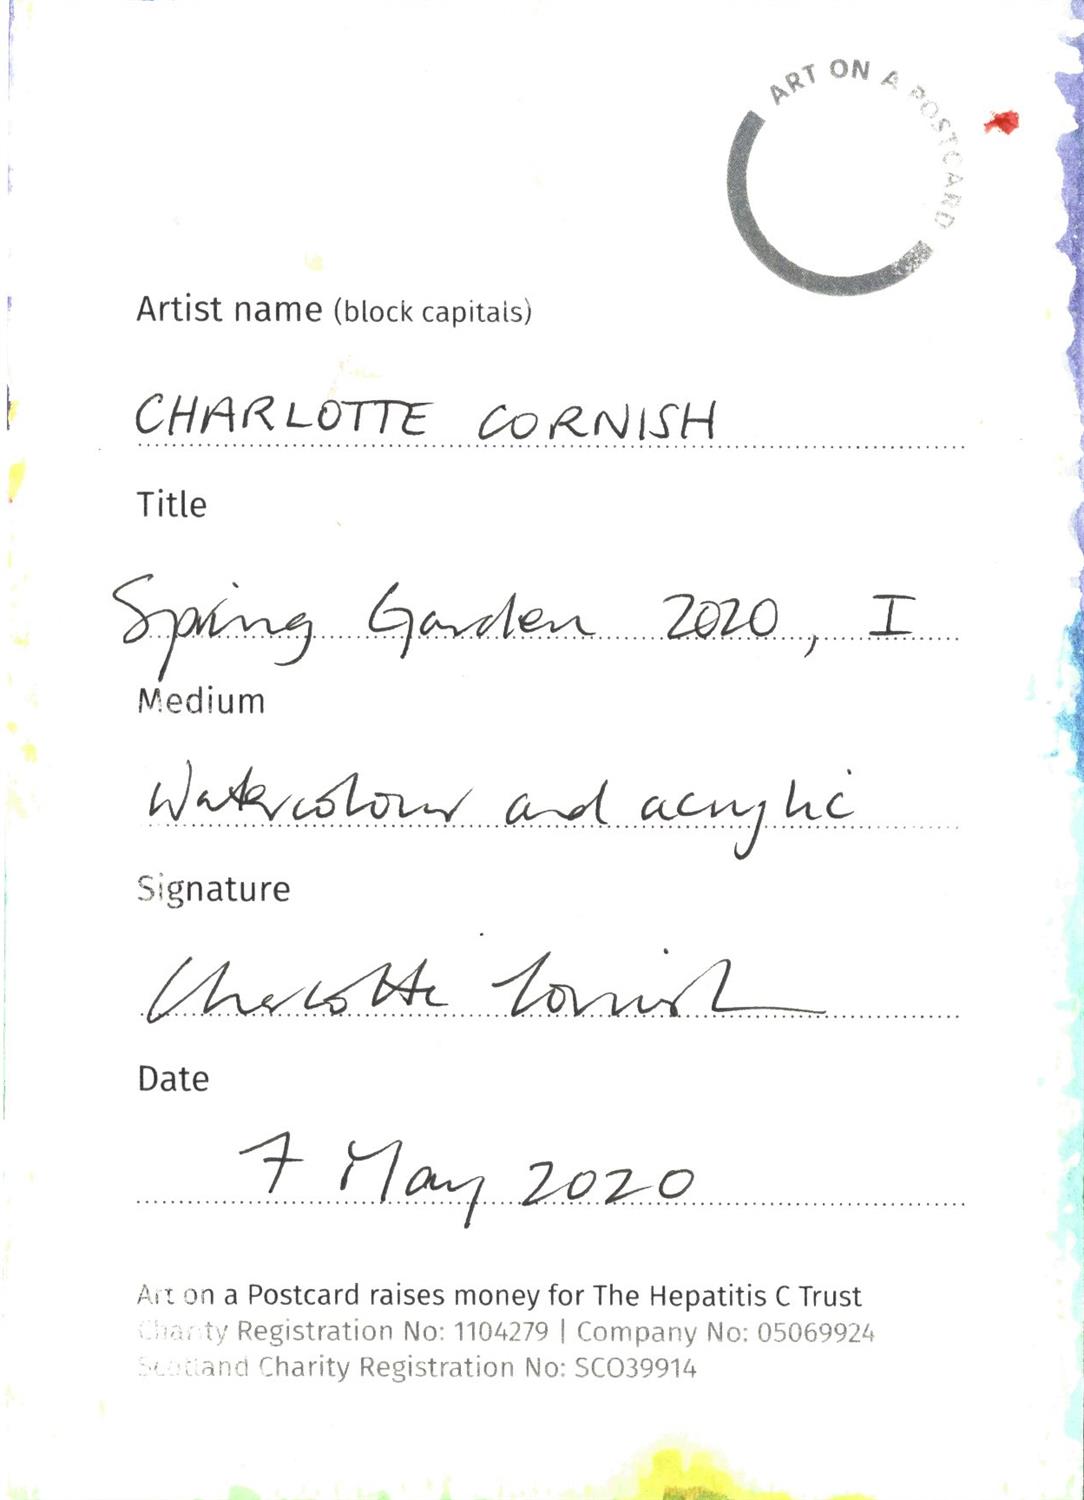 Charlotte Cornish, Spring Garden 2020, I - Image 3 of 3